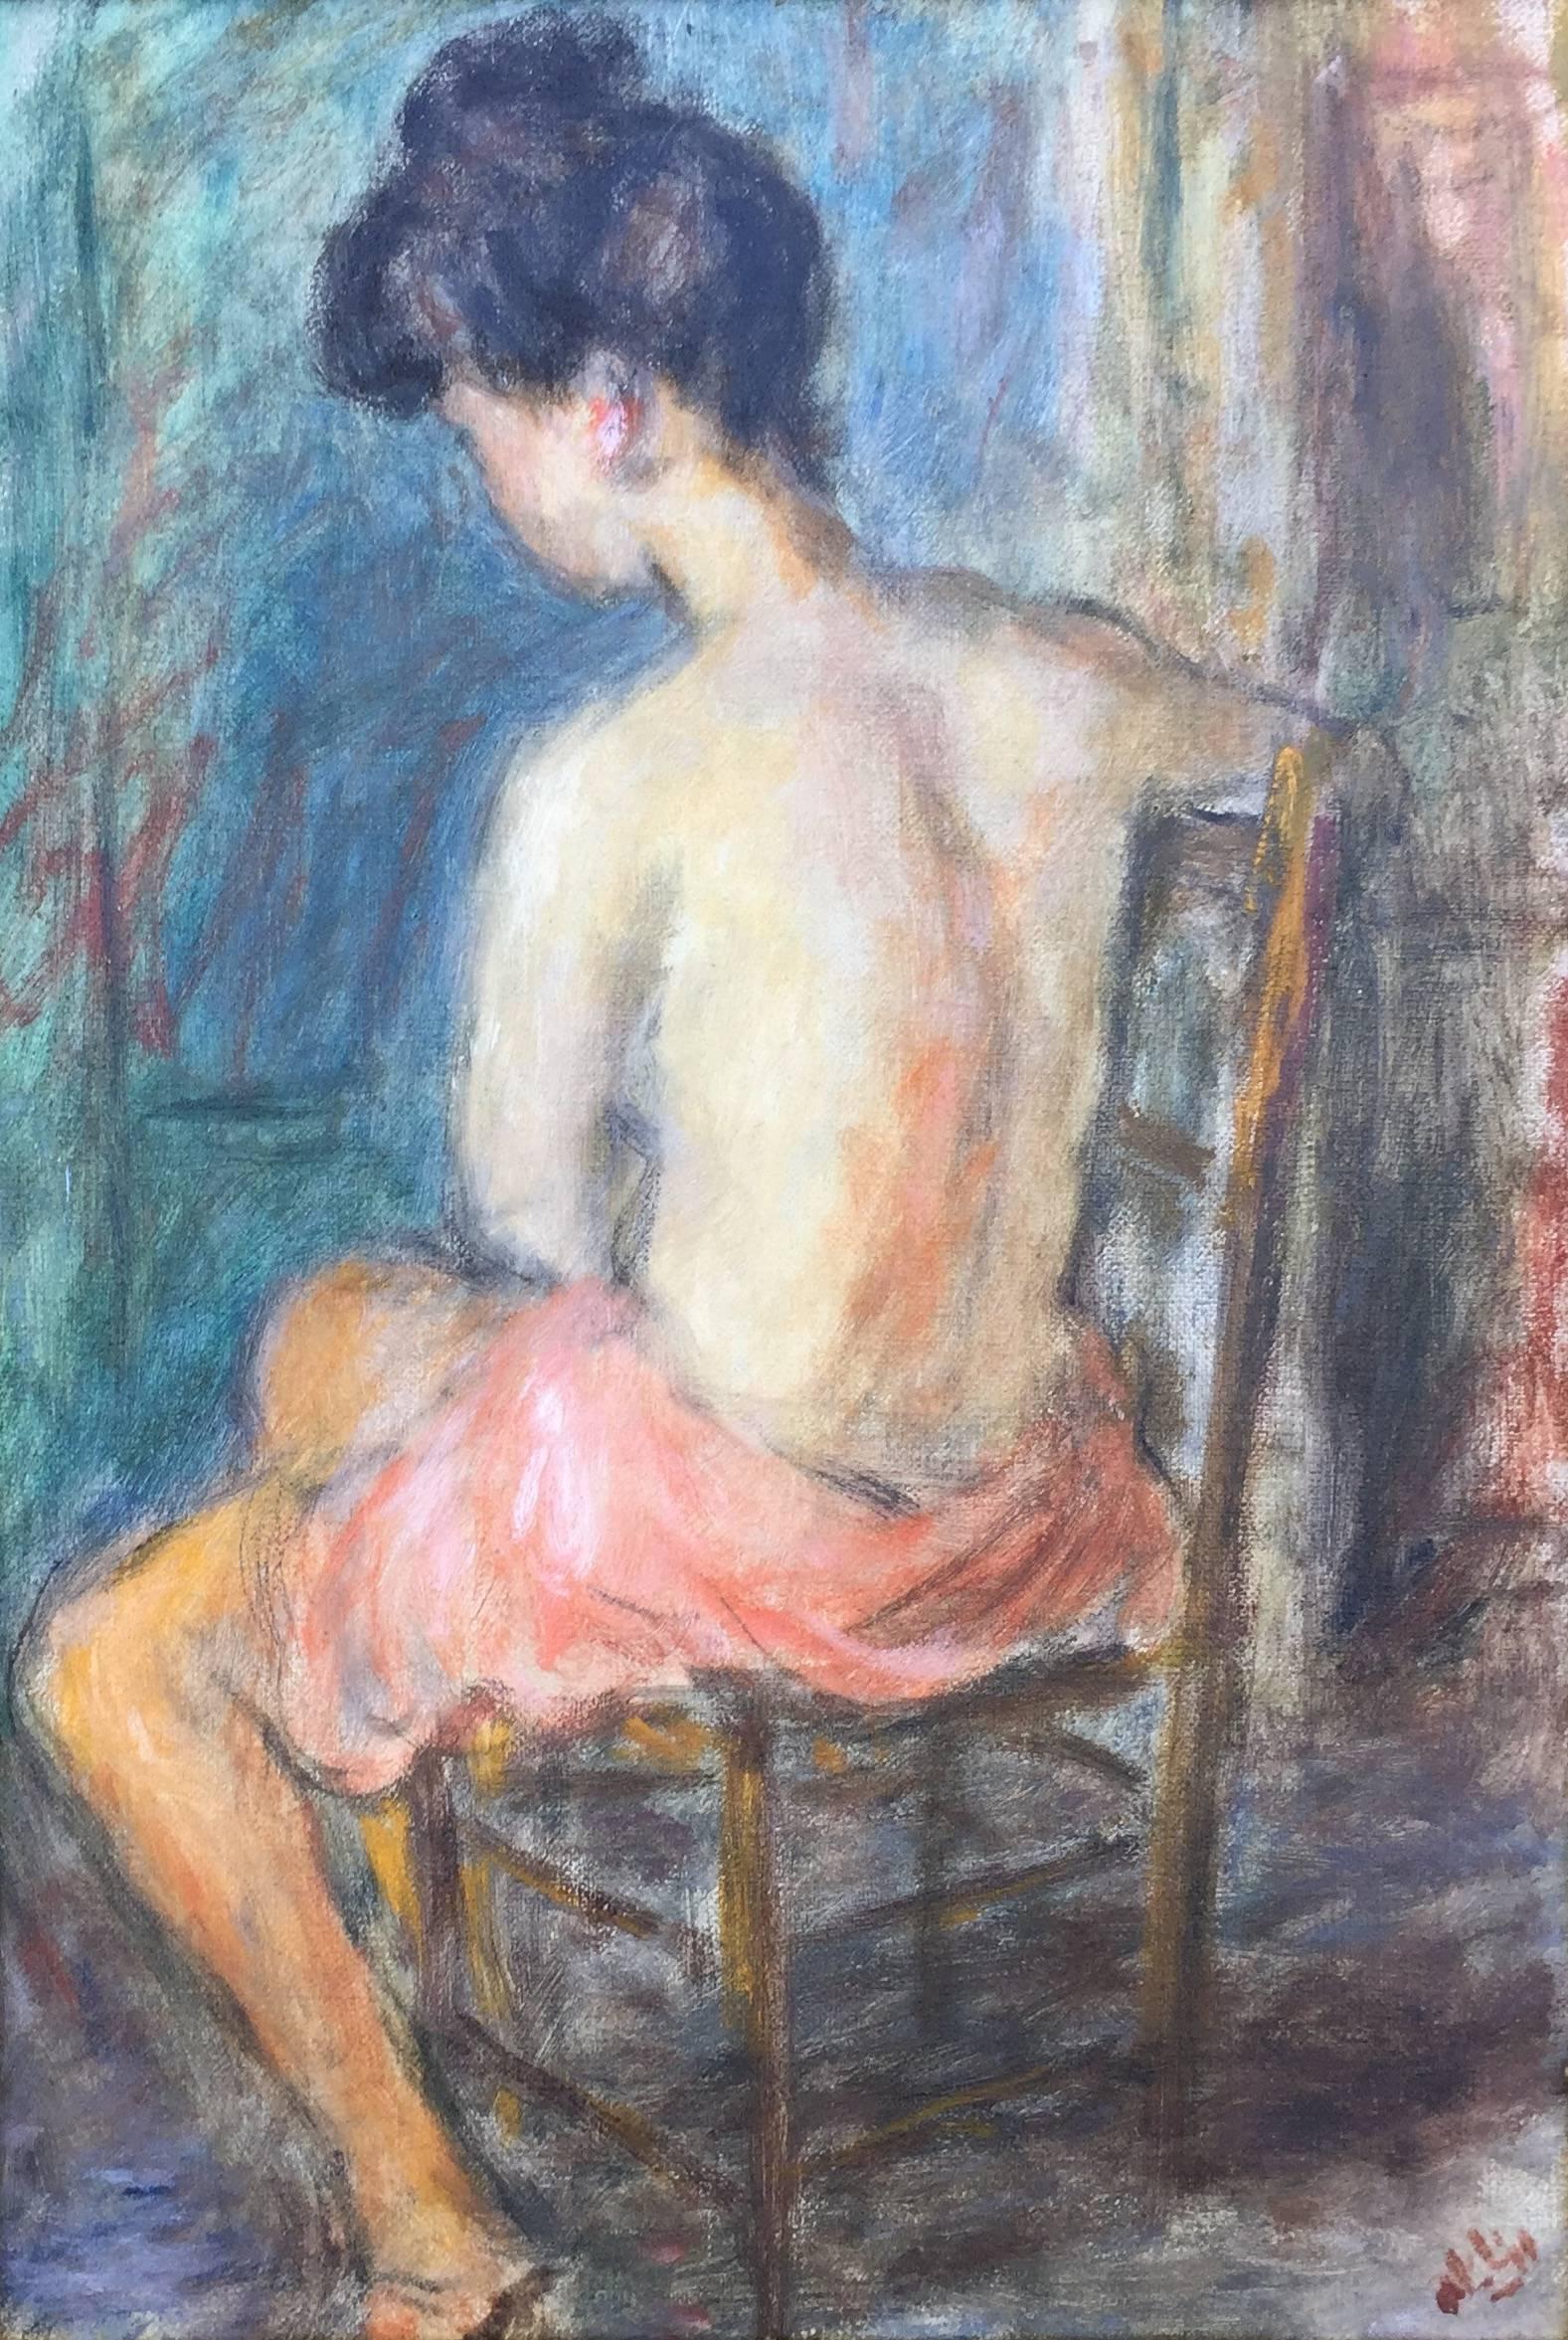 Robert Philipp Figurative Painting - "Pensive Nude"